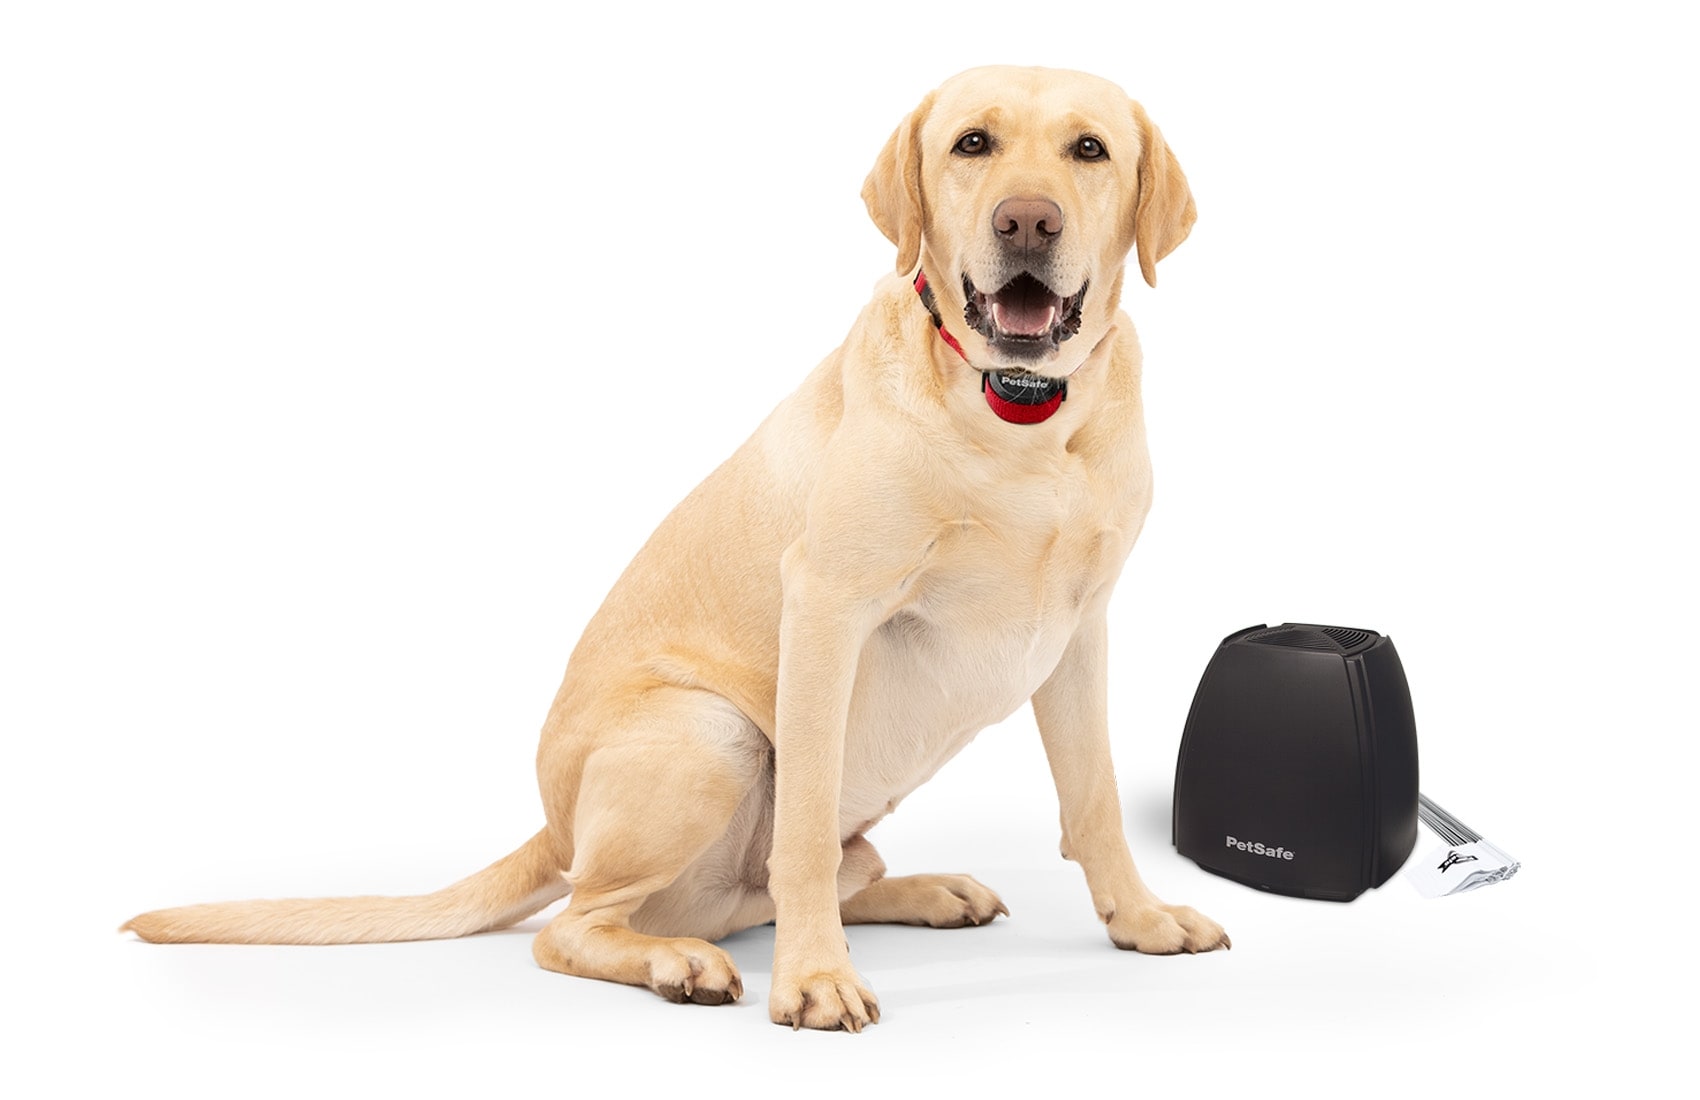 PETDIARY GPS Wireless Fence System Dog Tracker, Black, Medium